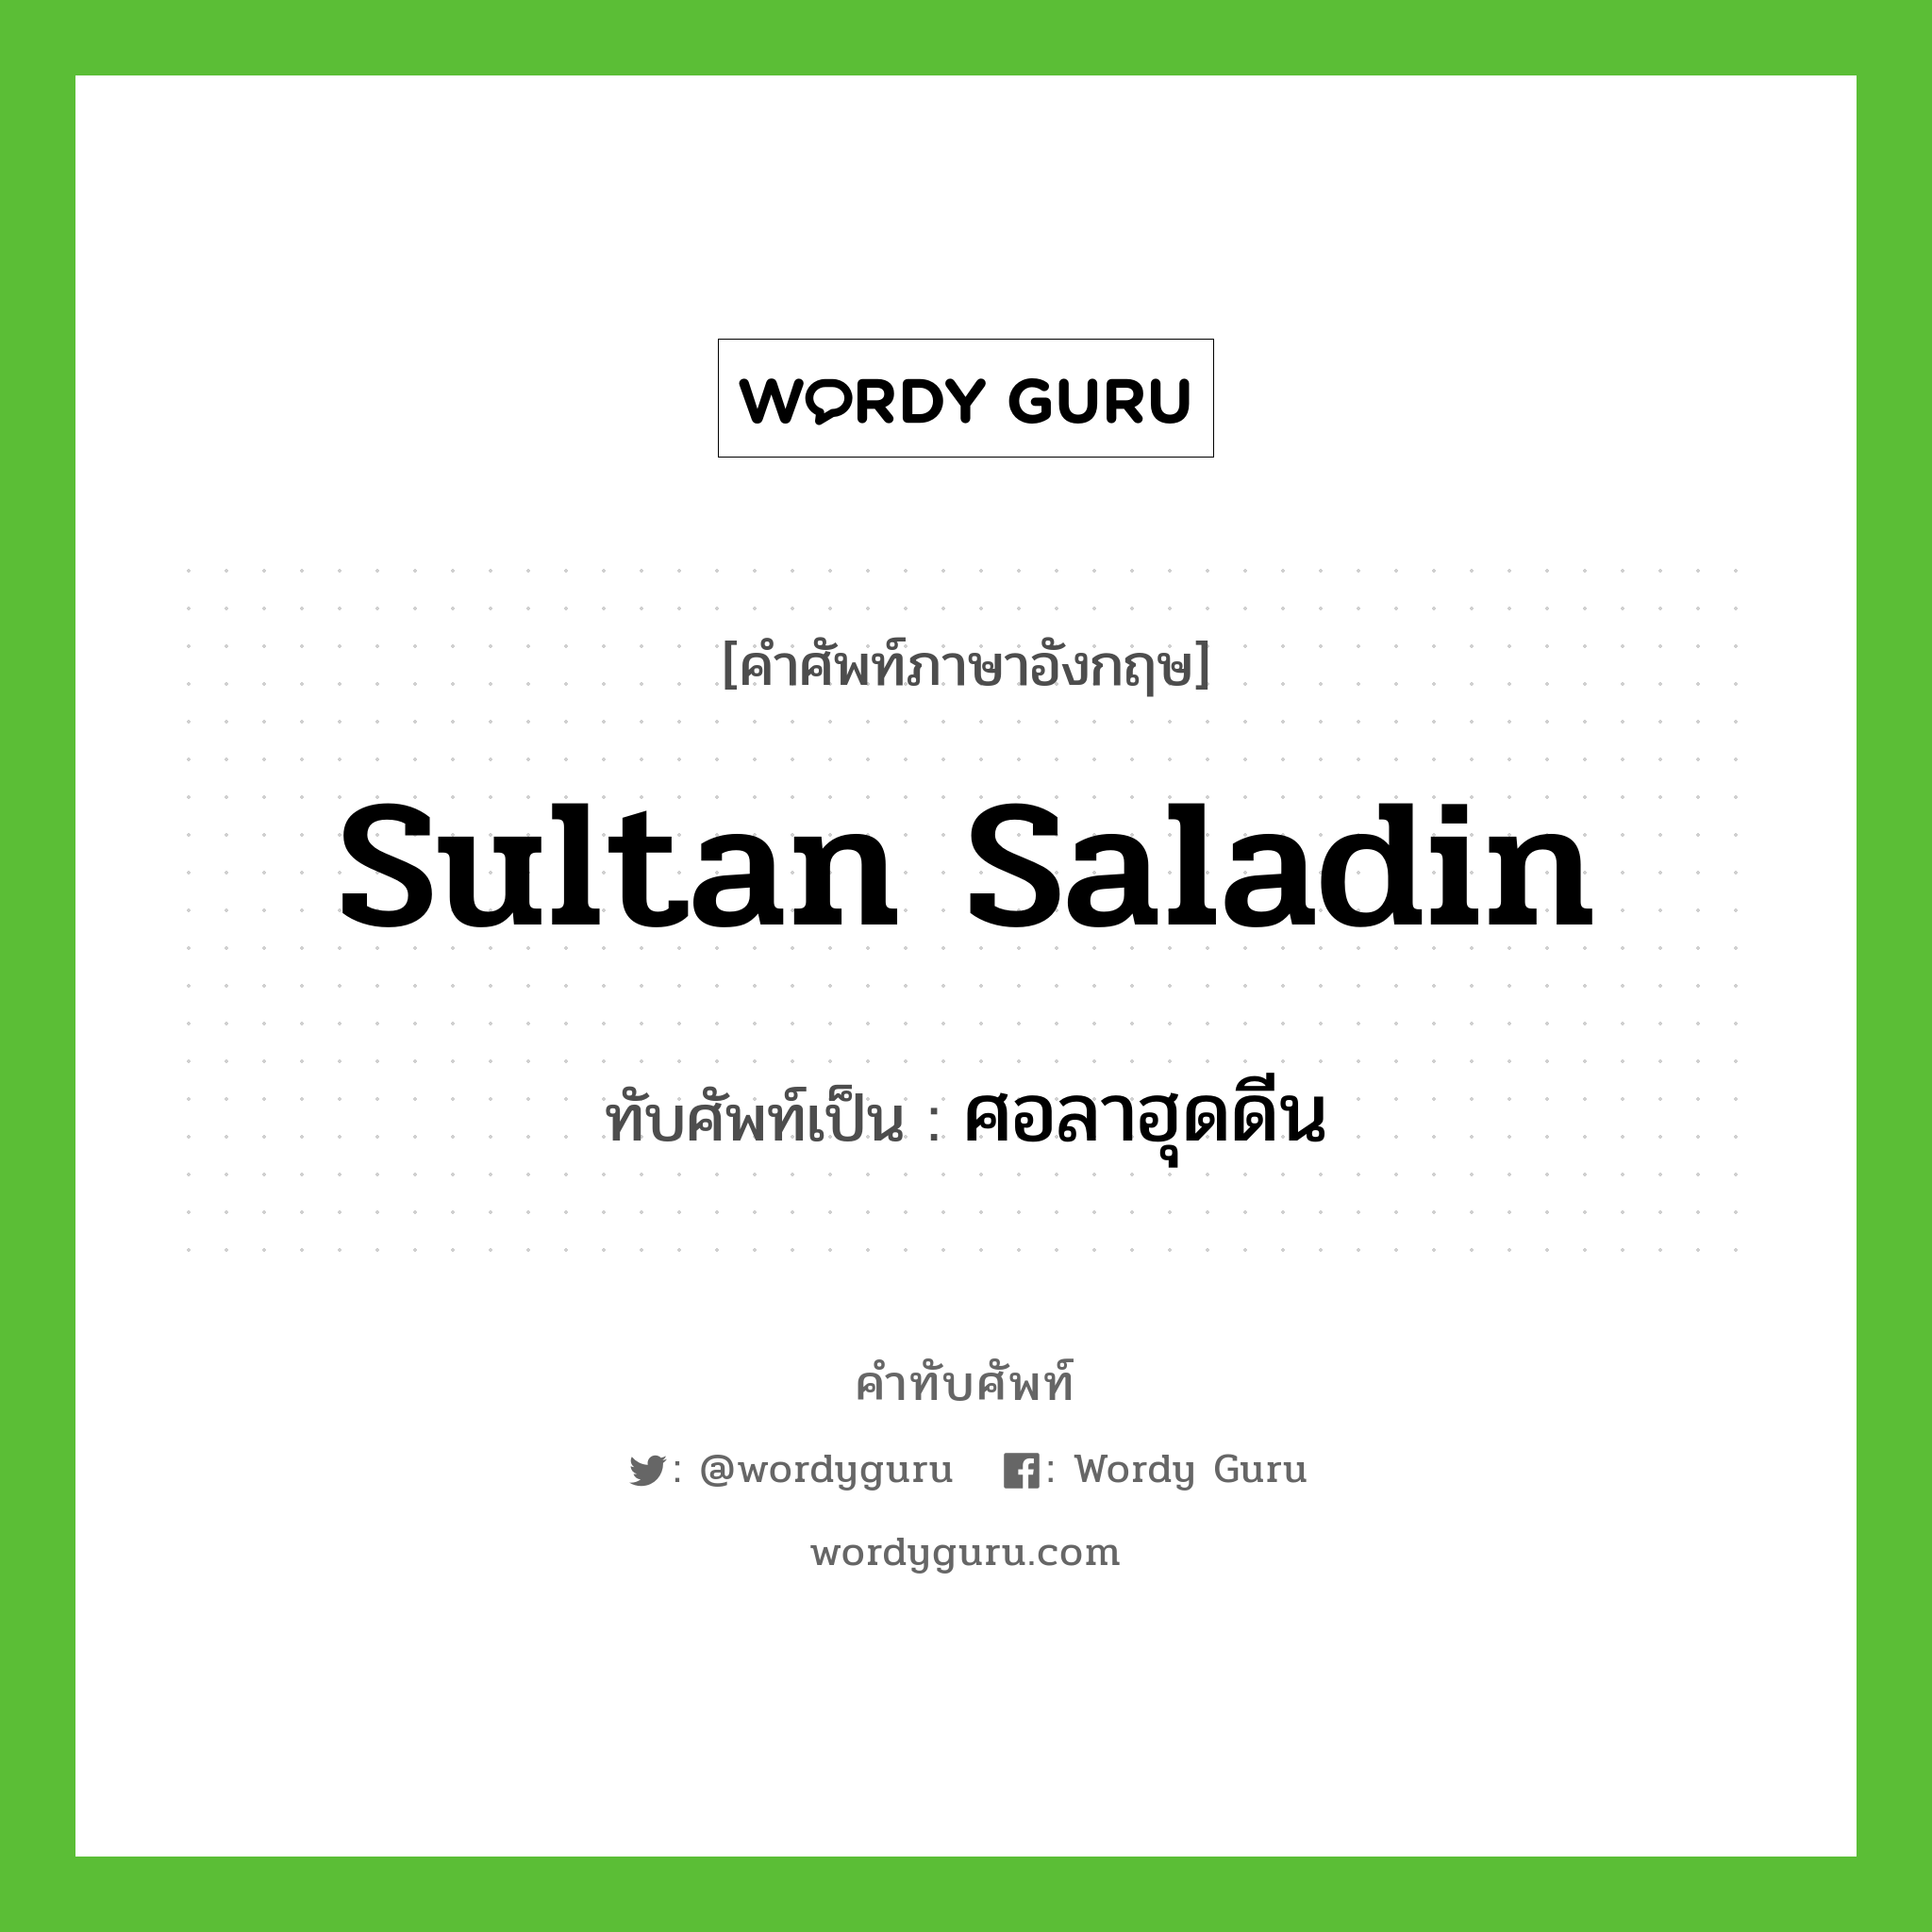 Sultan Saladin เขียนเป็นคำไทยว่าอะไร?, คำศัพท์ภาษาอังกฤษ Sultan Saladin ทับศัพท์เป็น ศอลาฮุดดีน